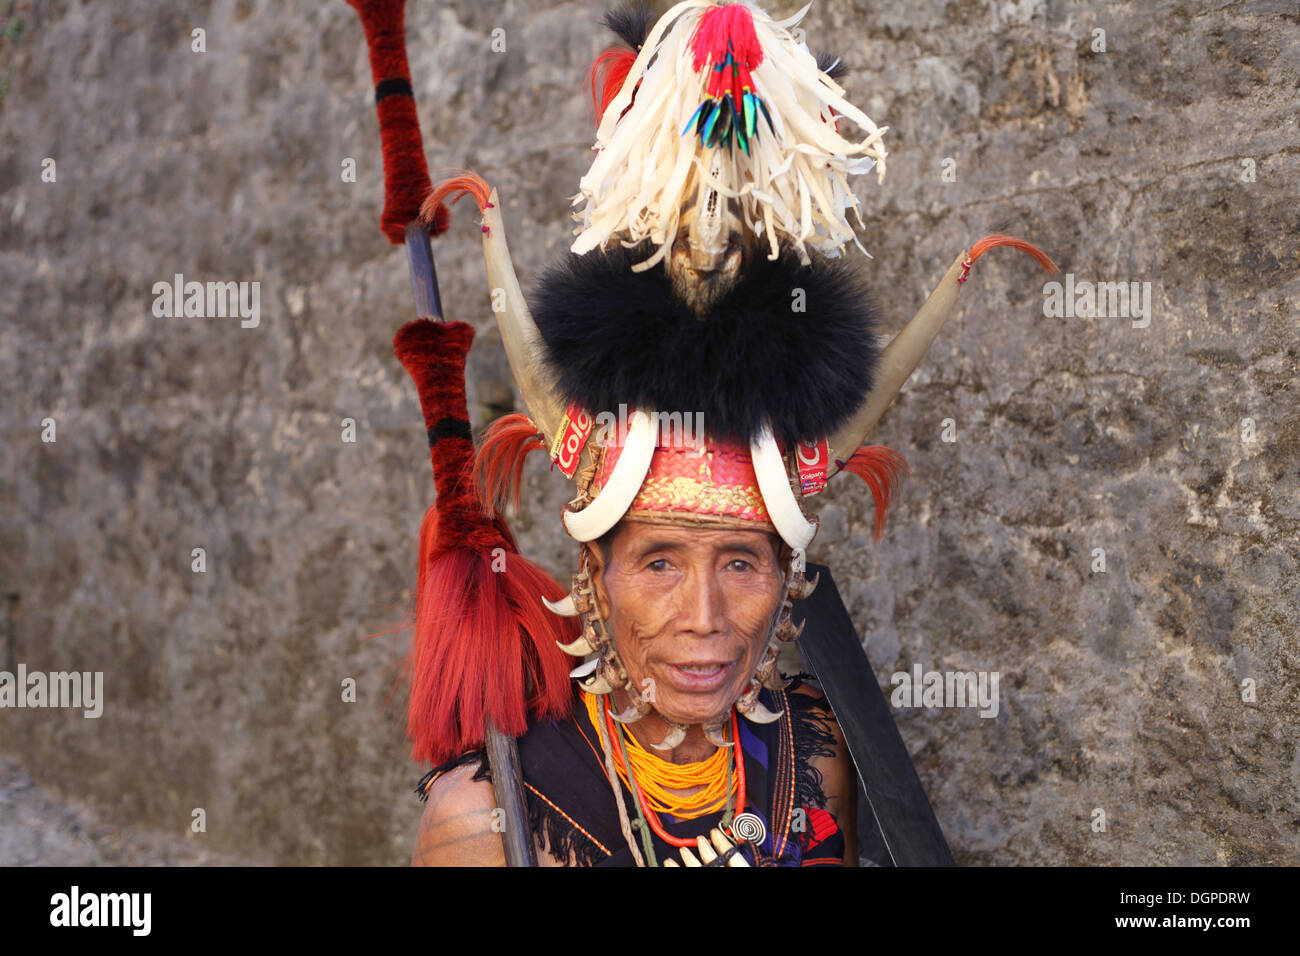 https://c8.alamy.com/comp/DGPDRW/naga-tribal-dancers-portrait-mimo-village-nagaland-india-DGPDRW.jpg